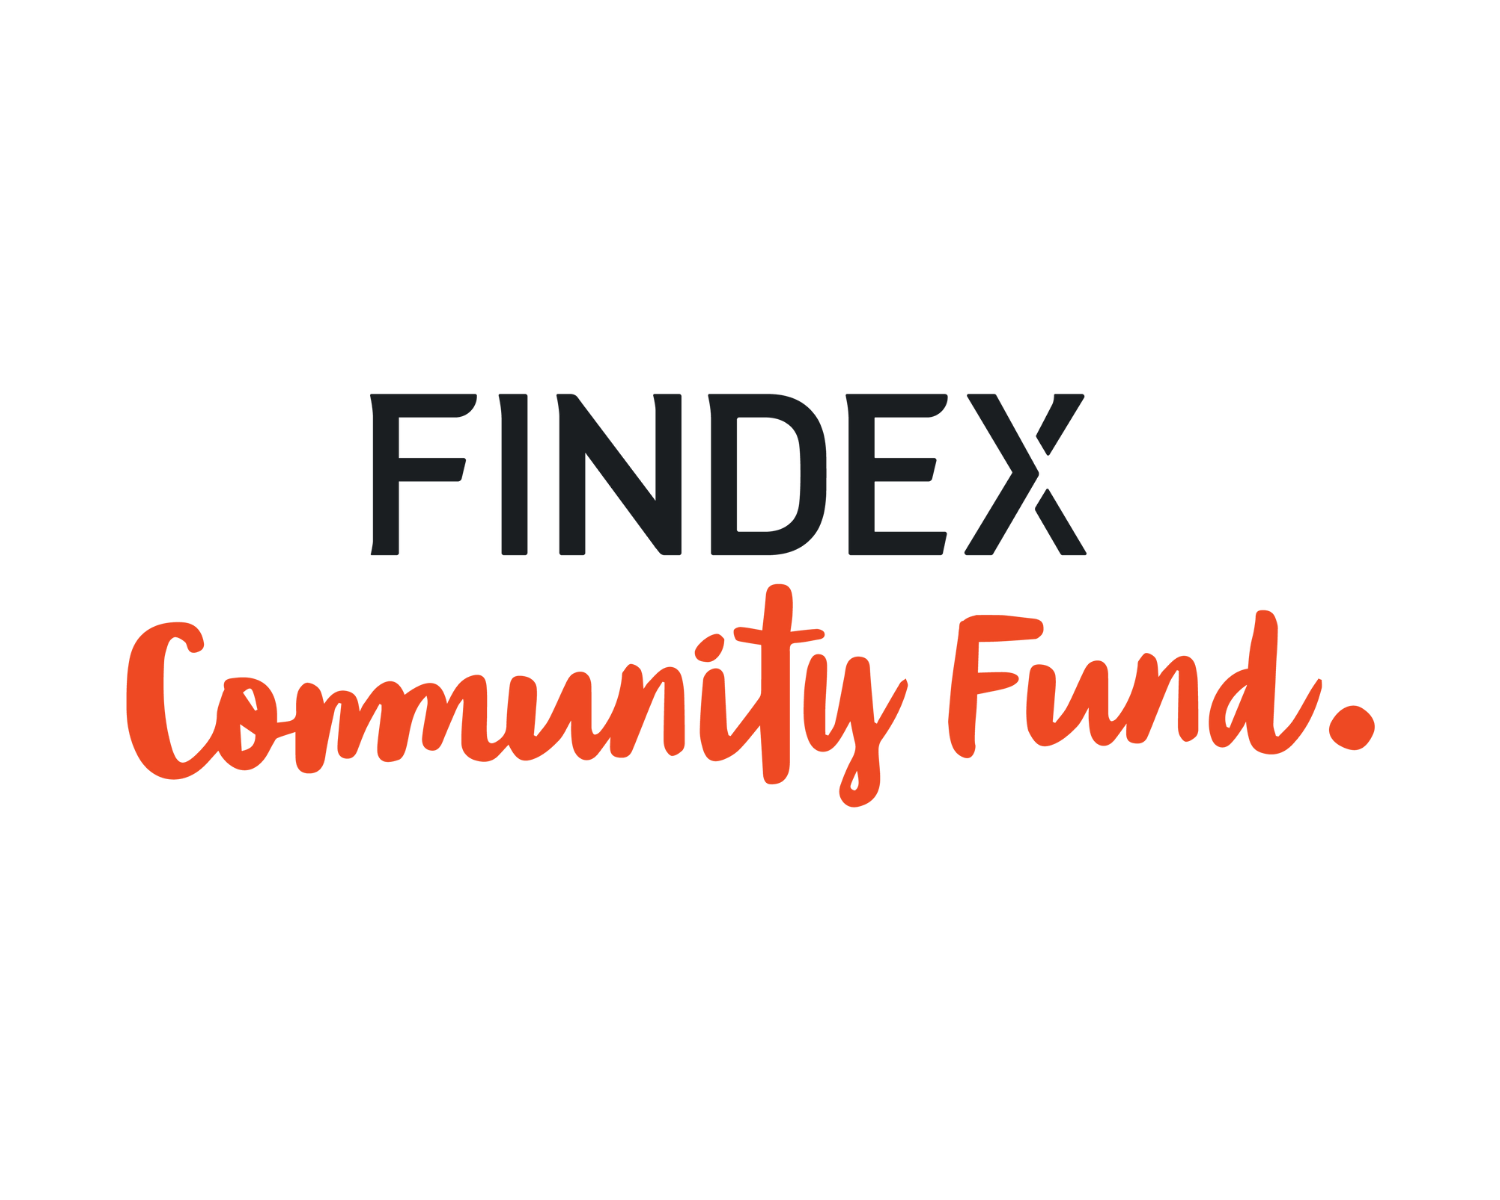 Findex Community Fund logo